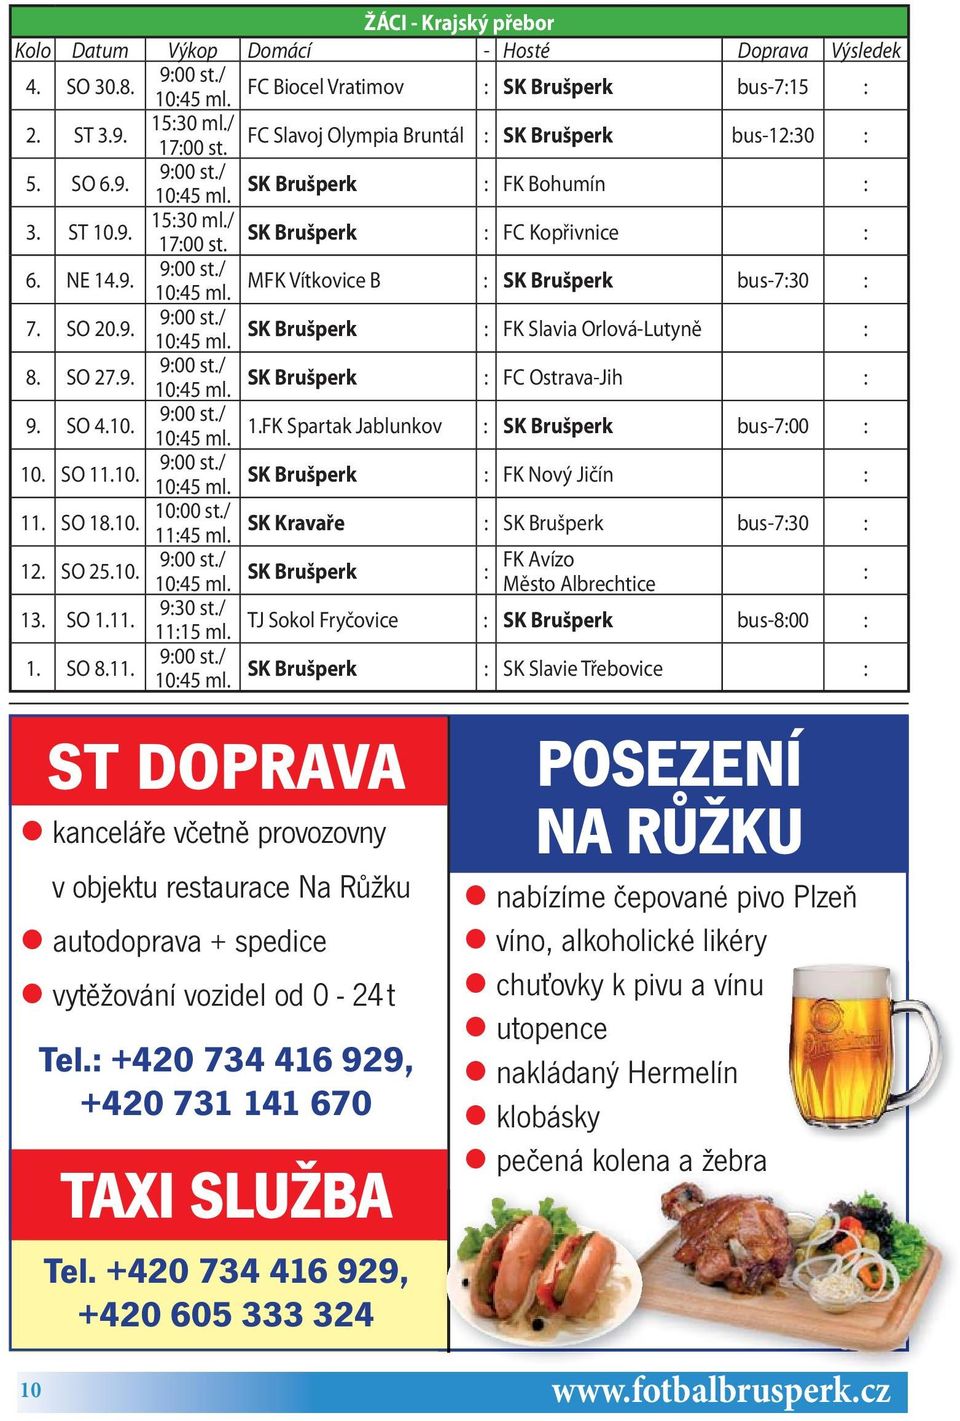 SO 20.9. SK Brušperk : FK Slavia Orlová-Lutyně : 8. SO 27.9. SK Brušperk : FC Ostrava-Jih : 9. SO 4.10. 1.FK Spartak Jablunkov : SK Brušperk bus-7:00 : 10. SO 11.10. SK Brušperk : FK Nový Jičín : 11.